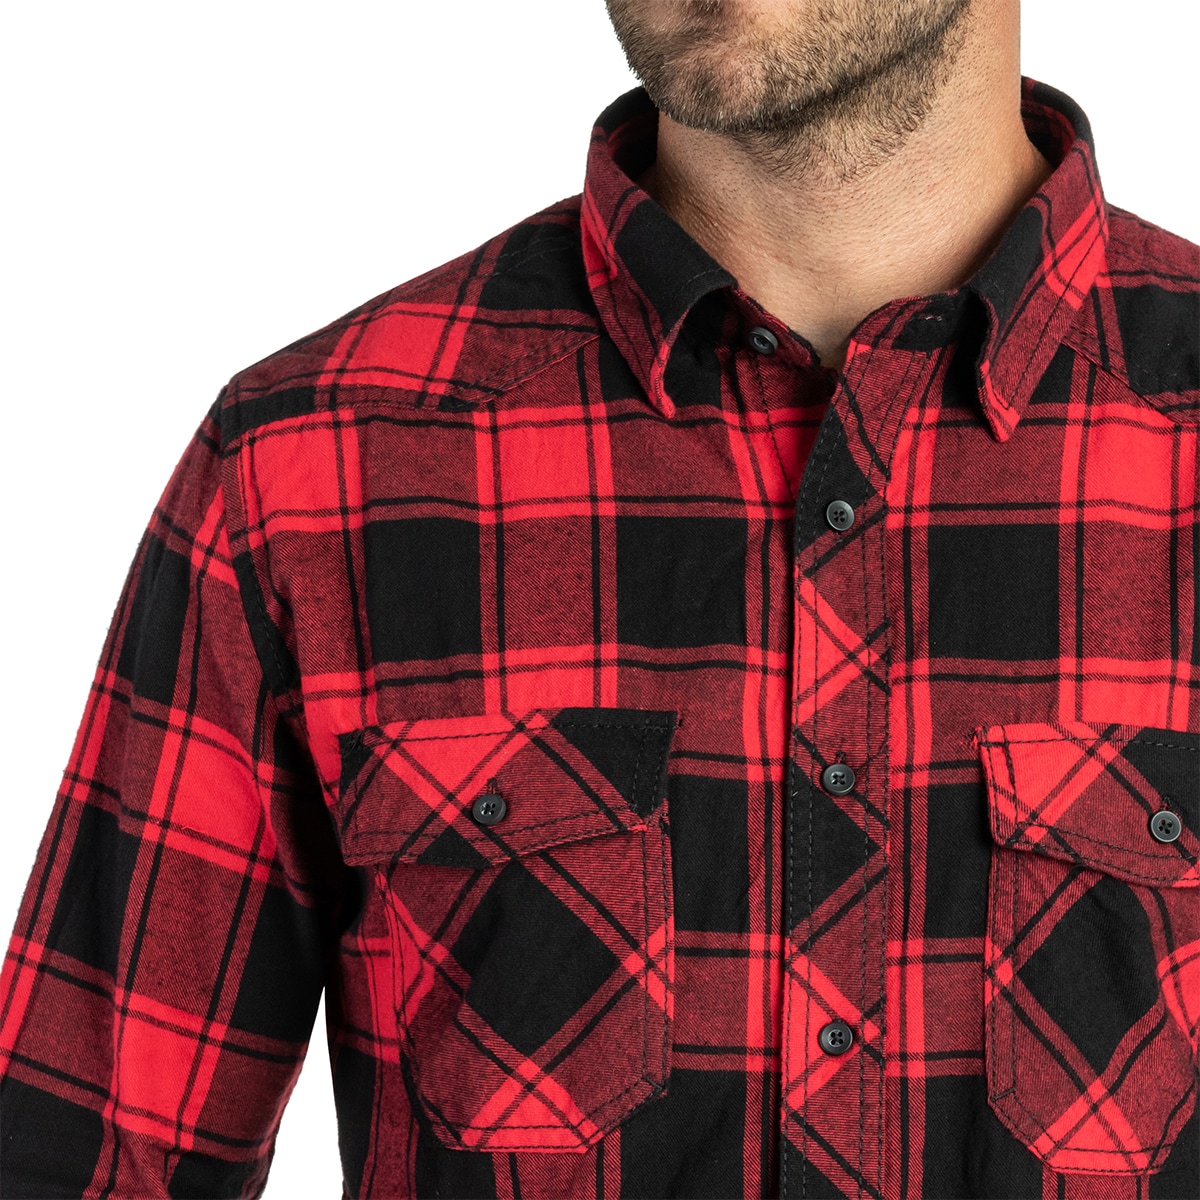 Koszula Brandit Check Shirt - Red/Black